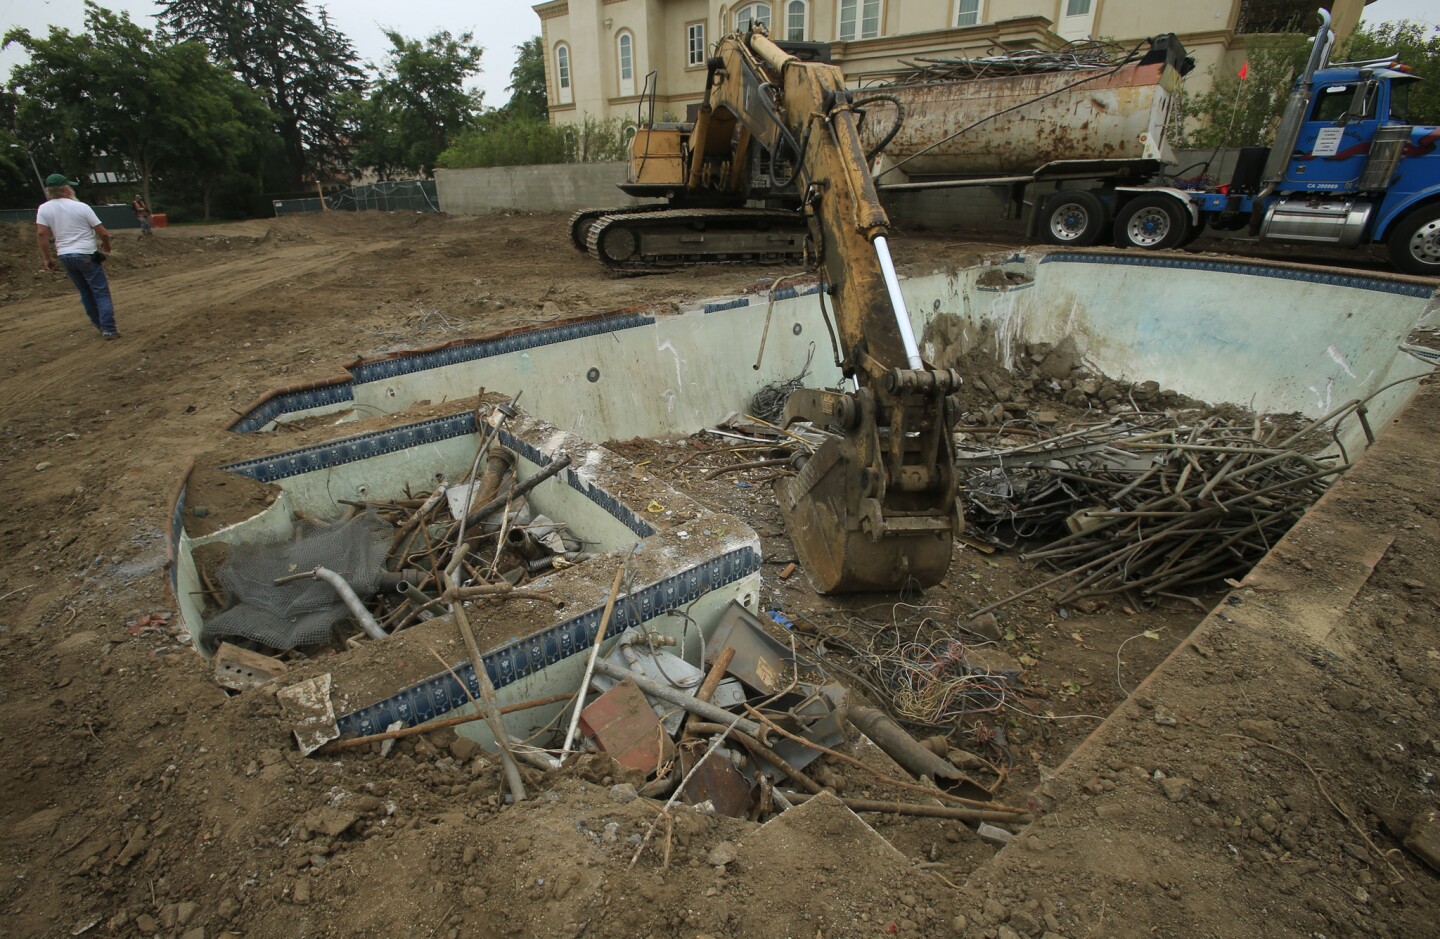 The home's demolished pool.